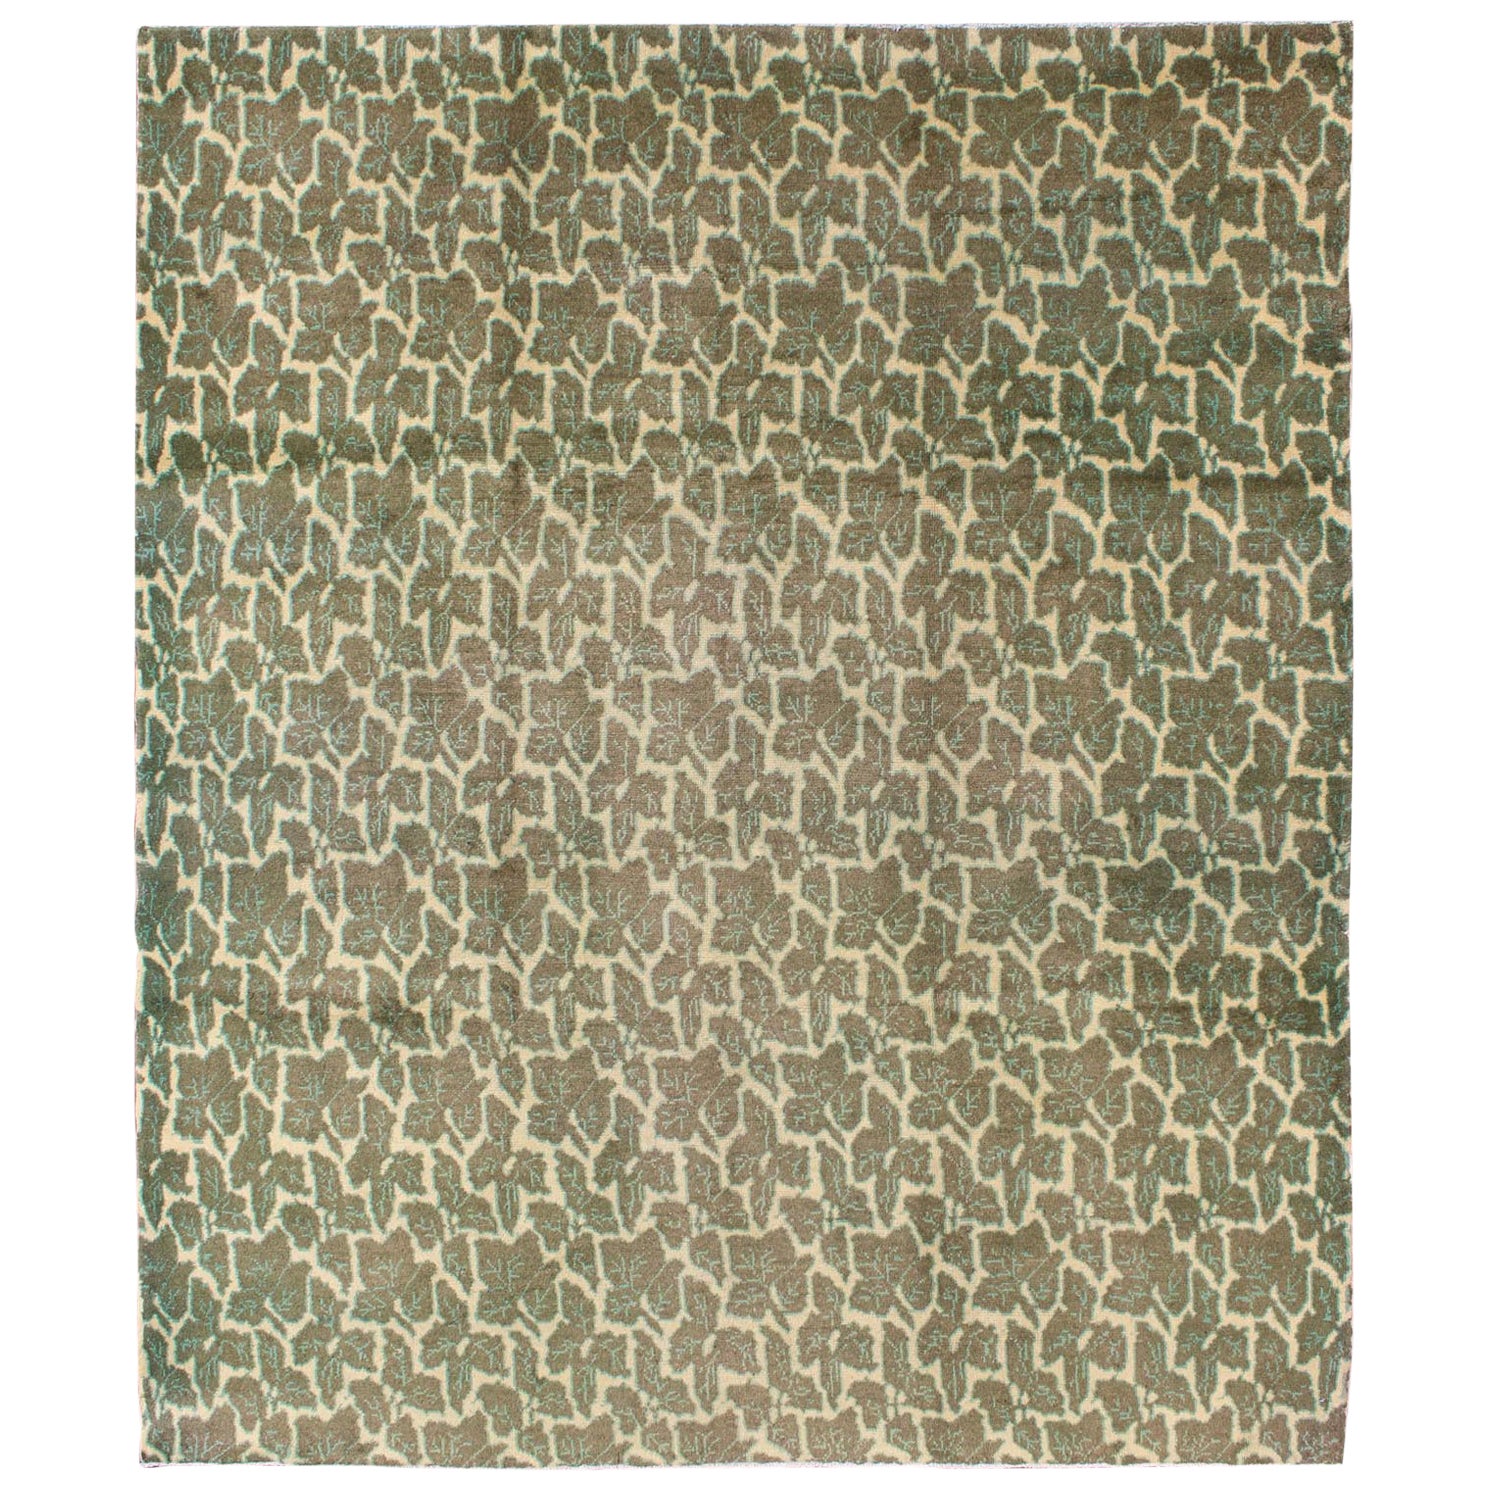 Green Colored Leaf Pattern Vintage Rug with a Modern Design in Squared Shape